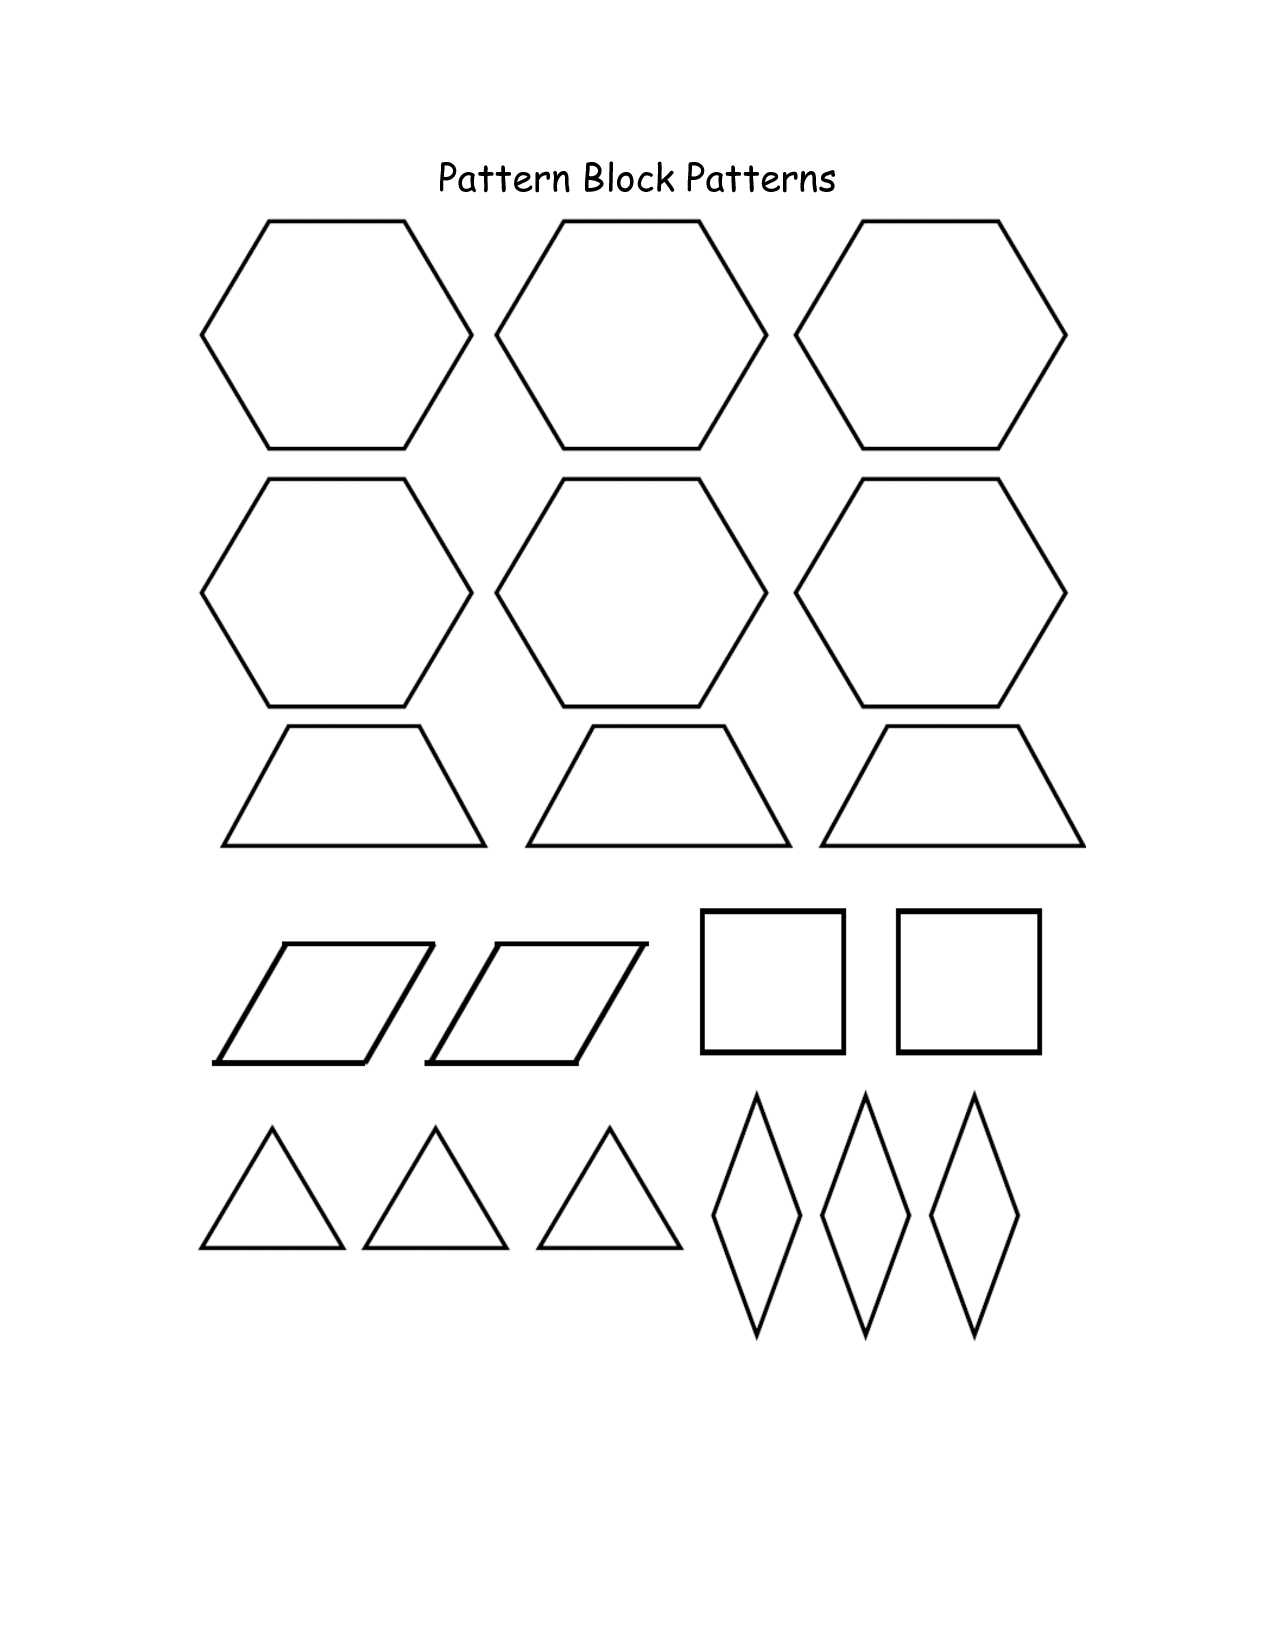 28 Images Of Blank Alphabet Pattern Block Template | Migapps Pertaining To Blank Pattern Block Templates